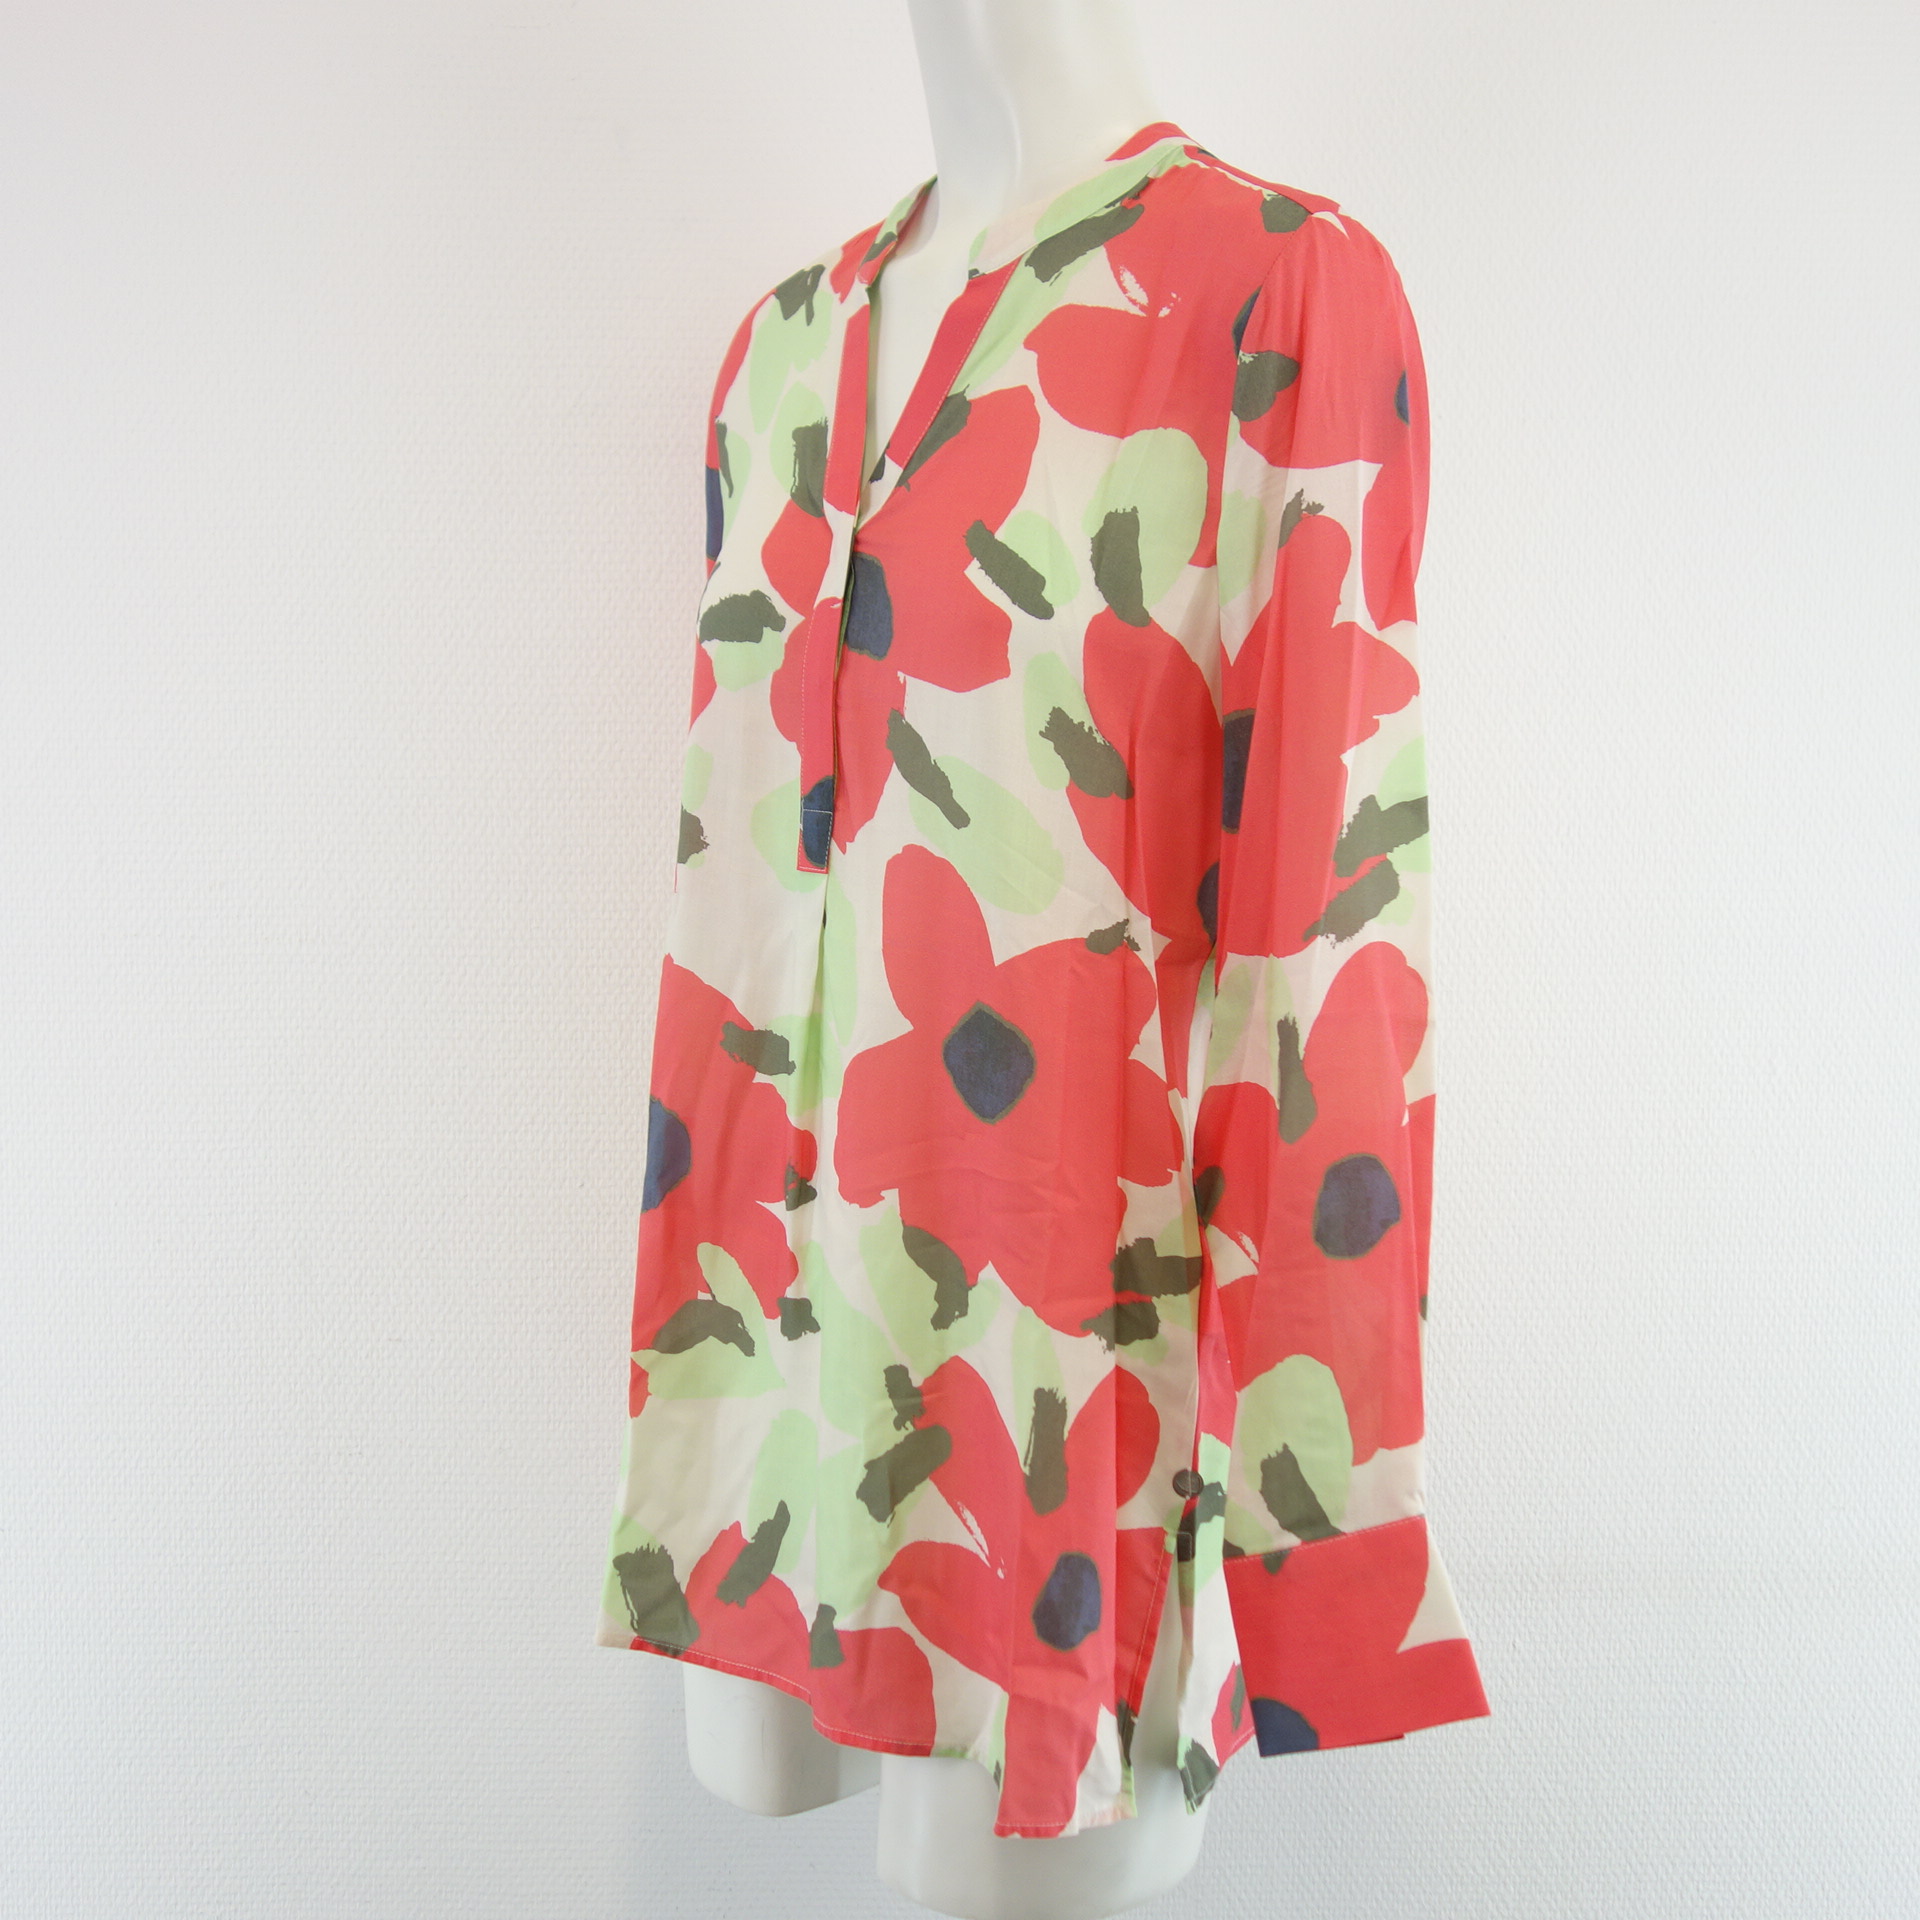 Damen Bluse MILANO ITALY Rot Grün Beige Blumen Muster 100% Viskose